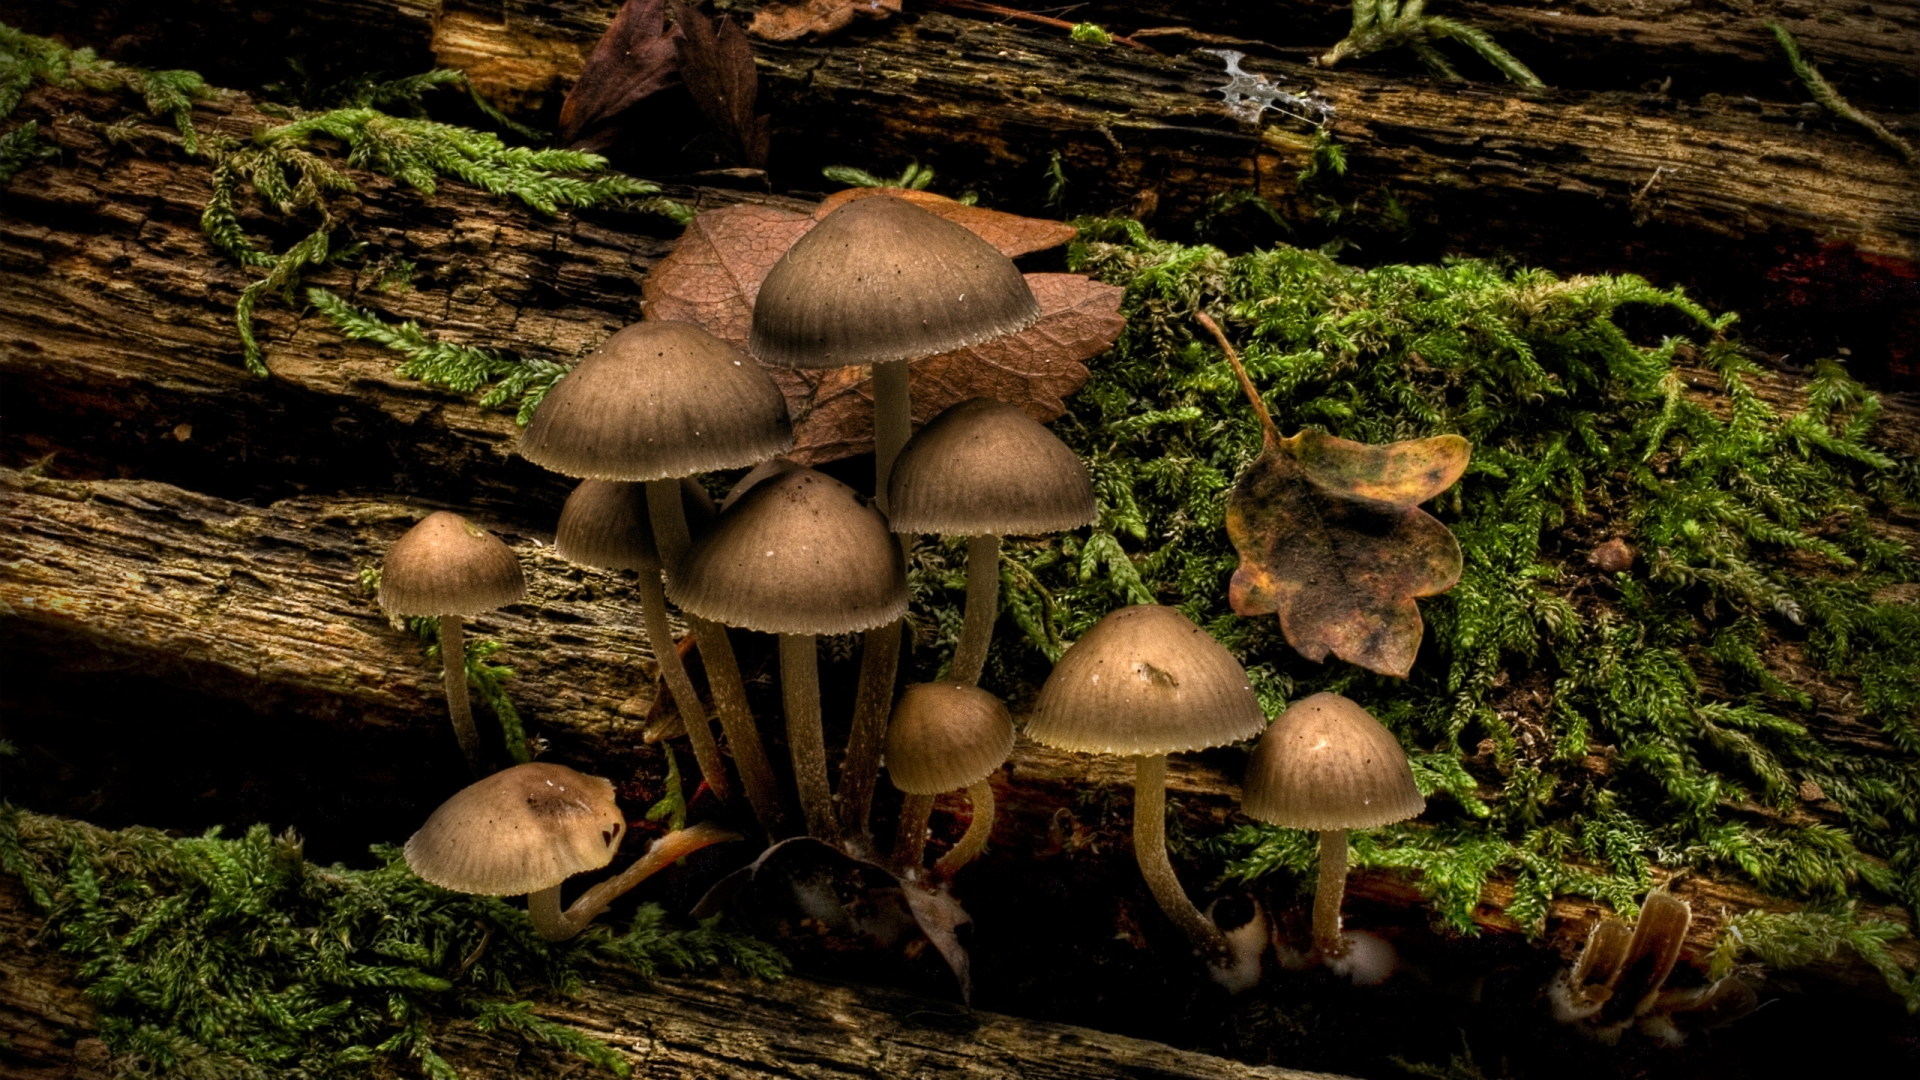 Mushrooms for 1920 x 1080 HDTV 1080p resolution